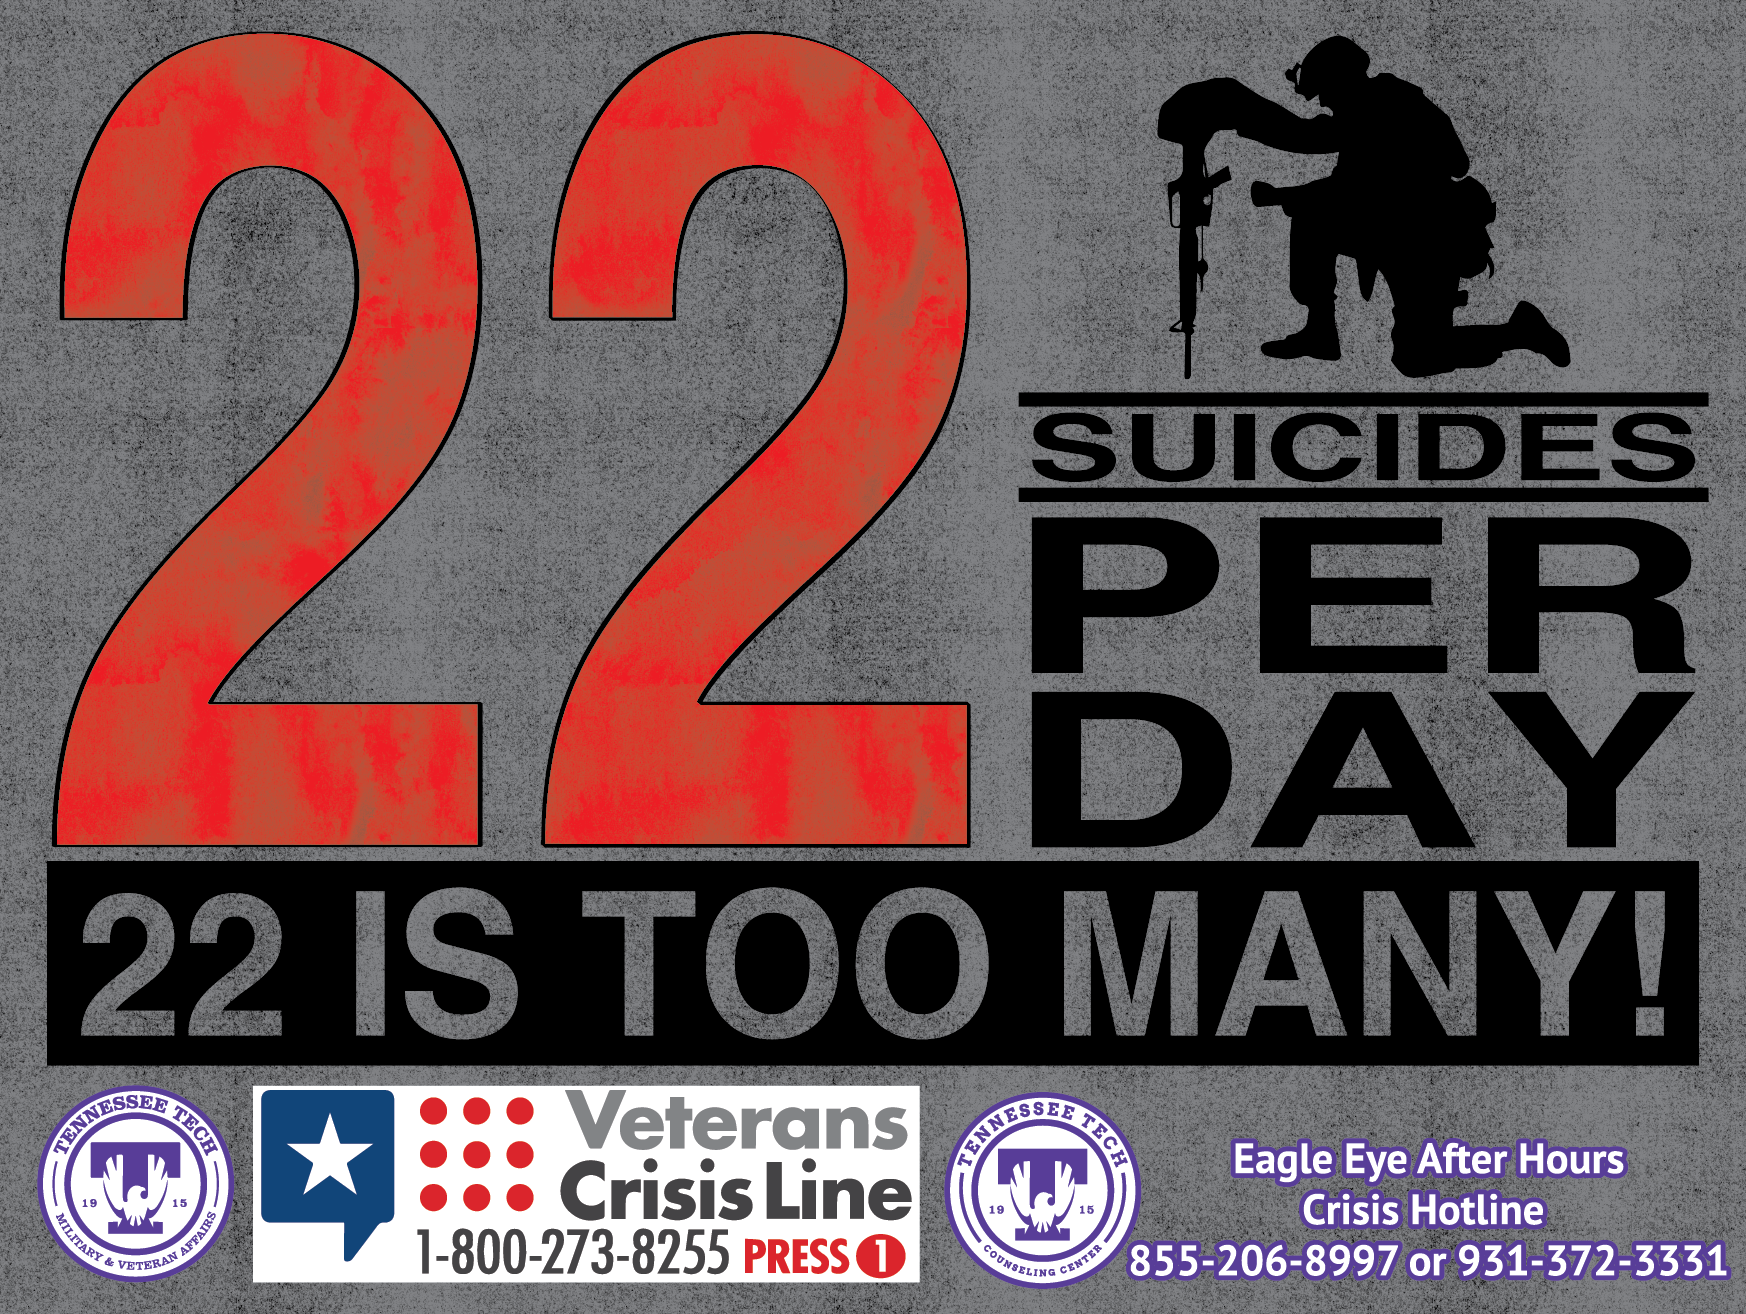 922 Veteran Suicide Awareness Day Tech Times